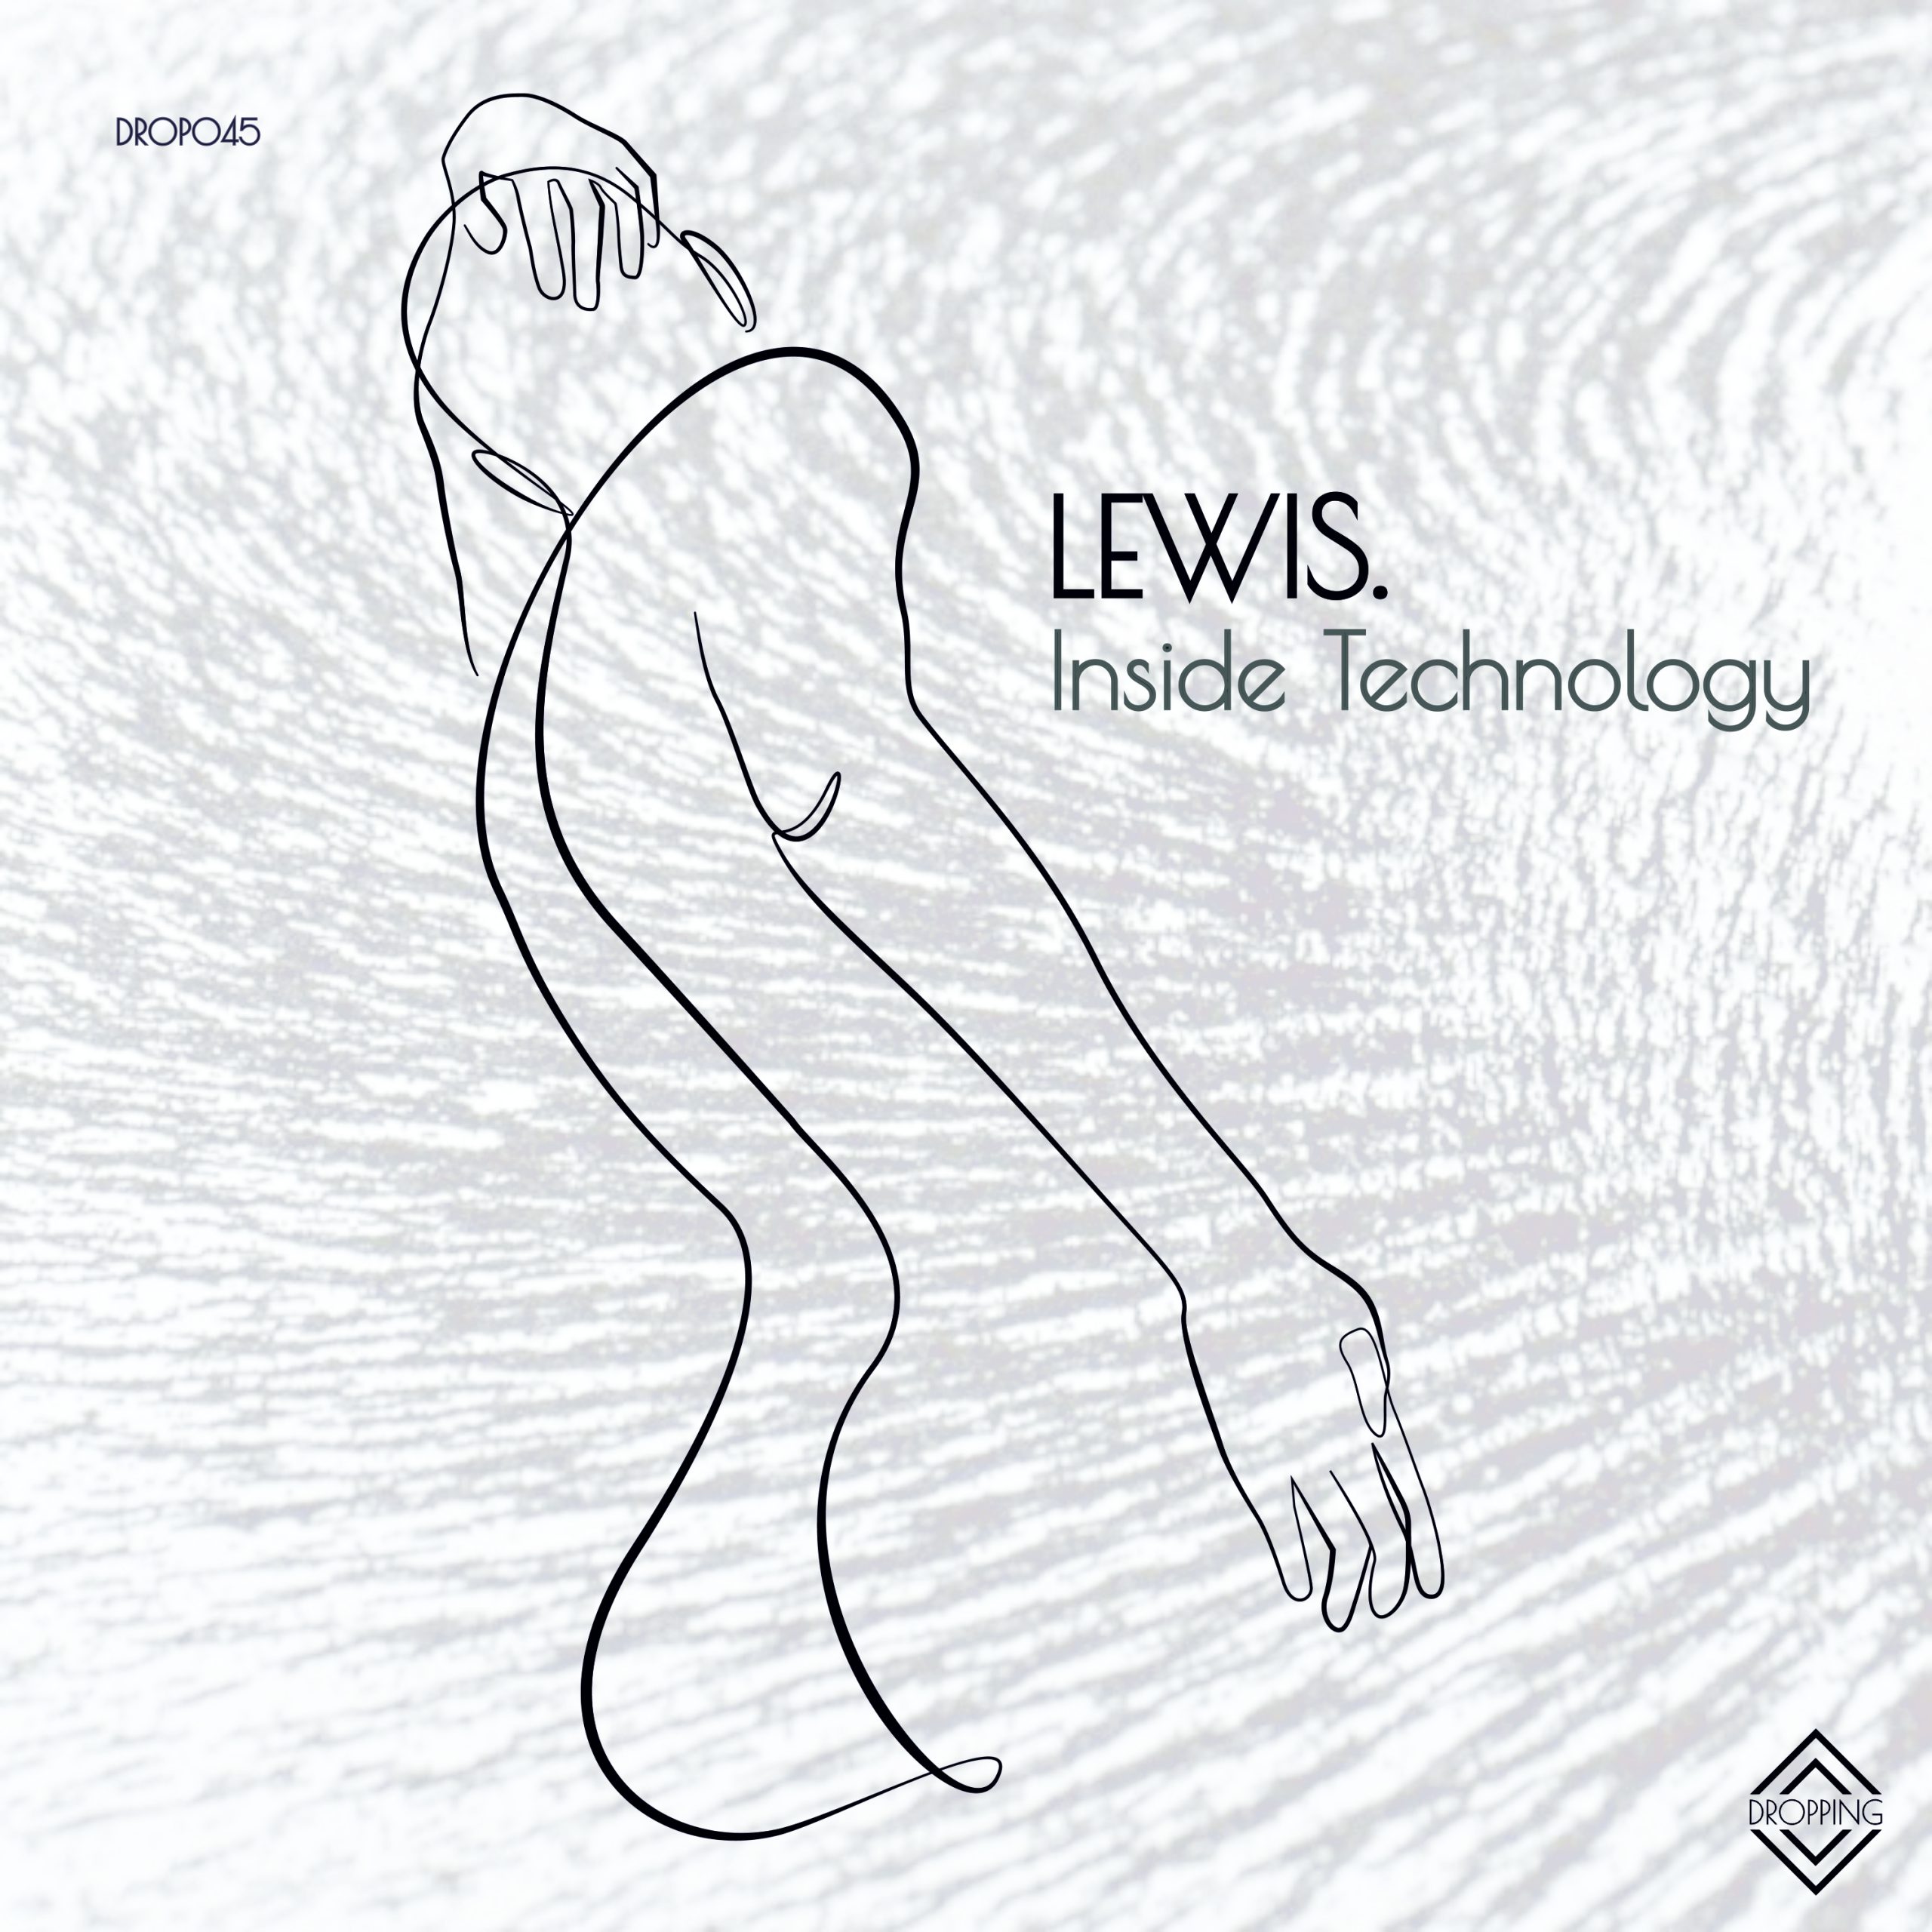 drop045 lewis – inside technology ep